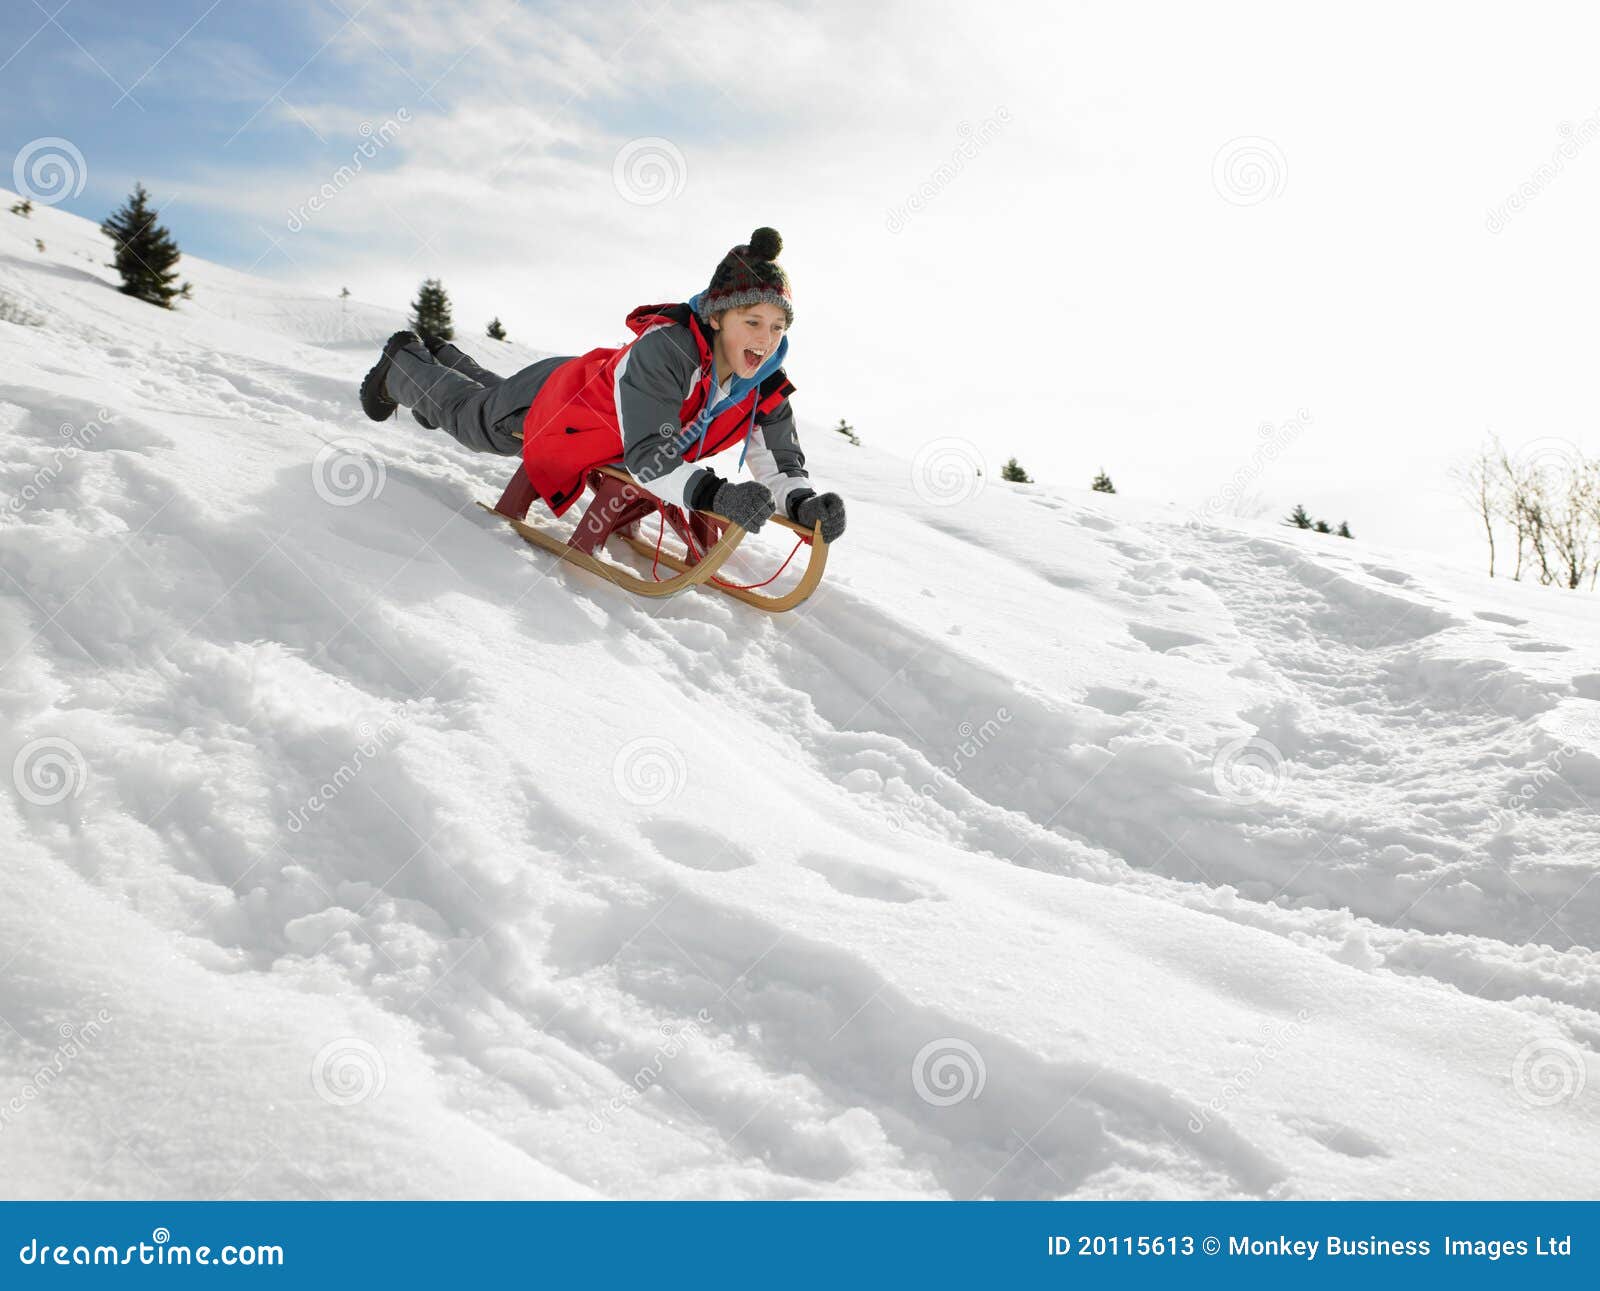 pre-teen boy on a sled in the snow